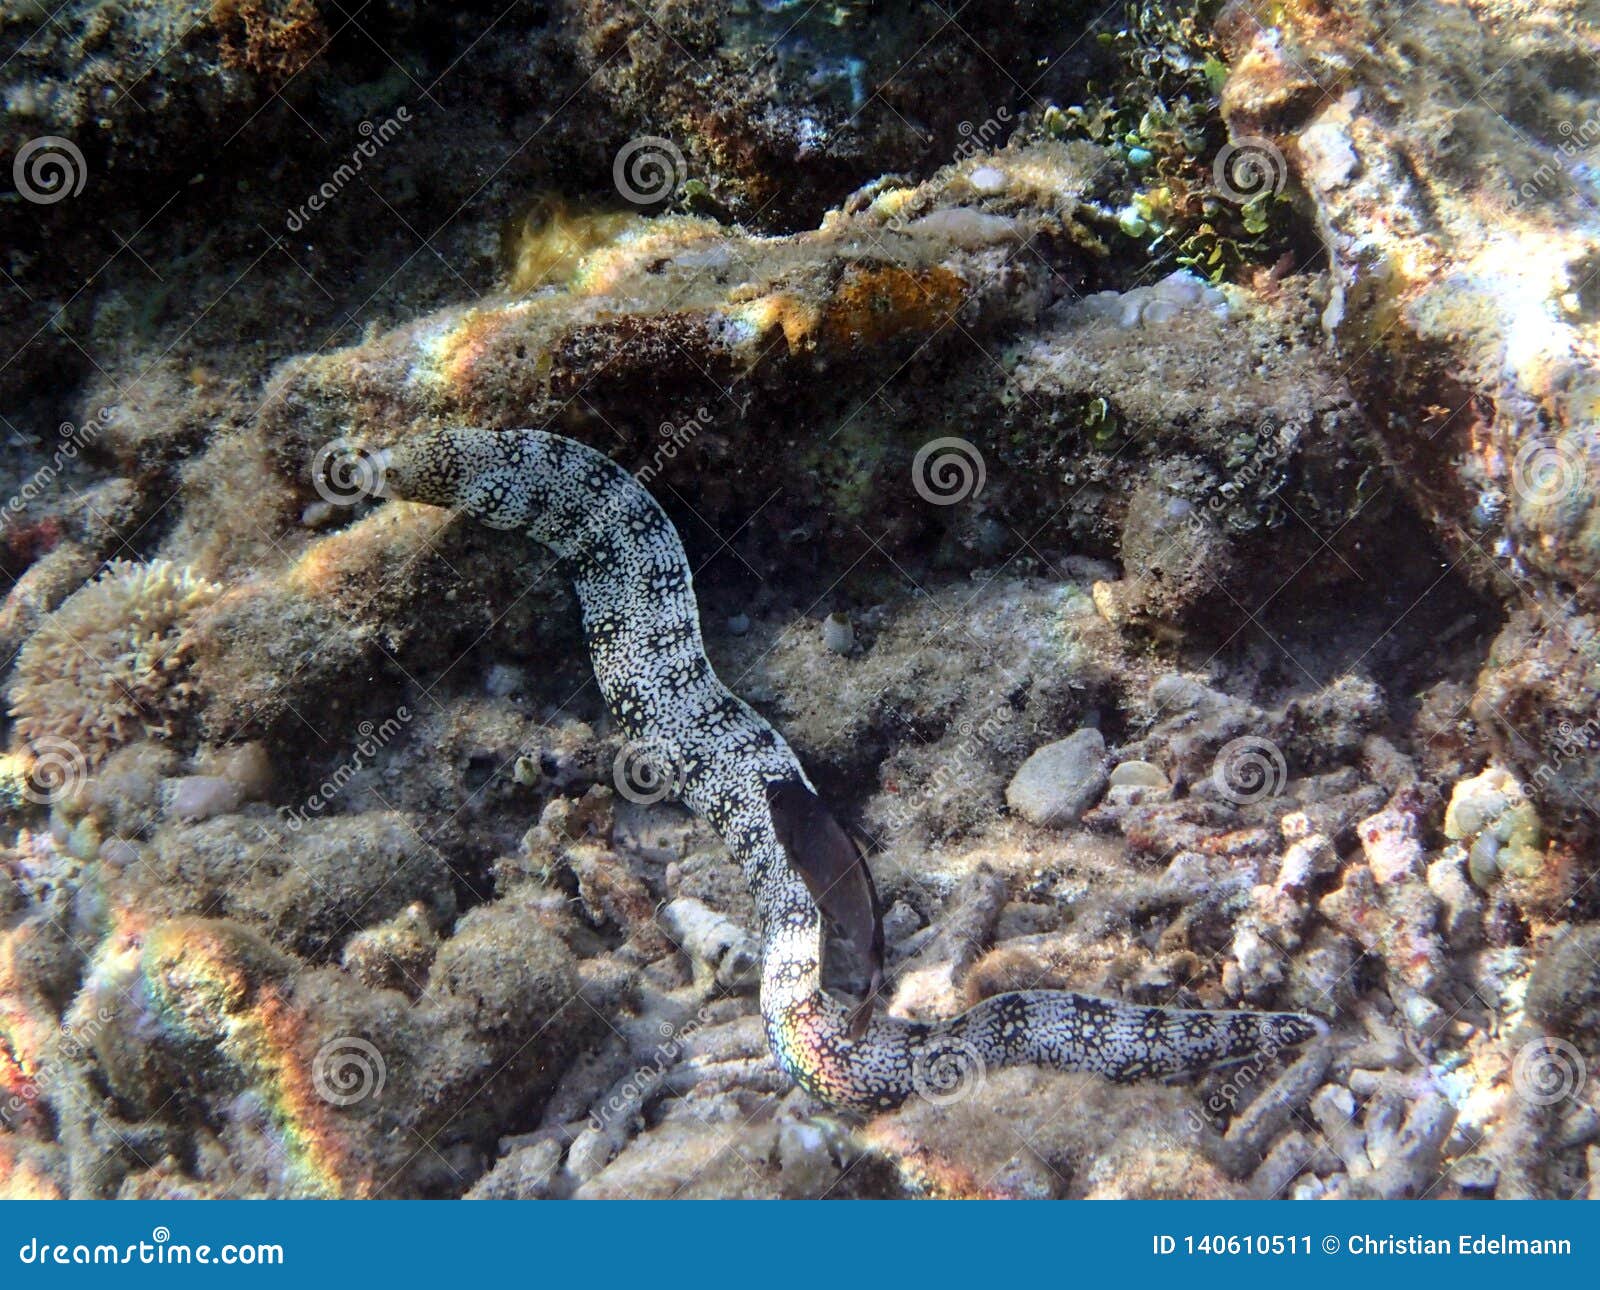 moray eel muraenidae - gili air indonesia asia